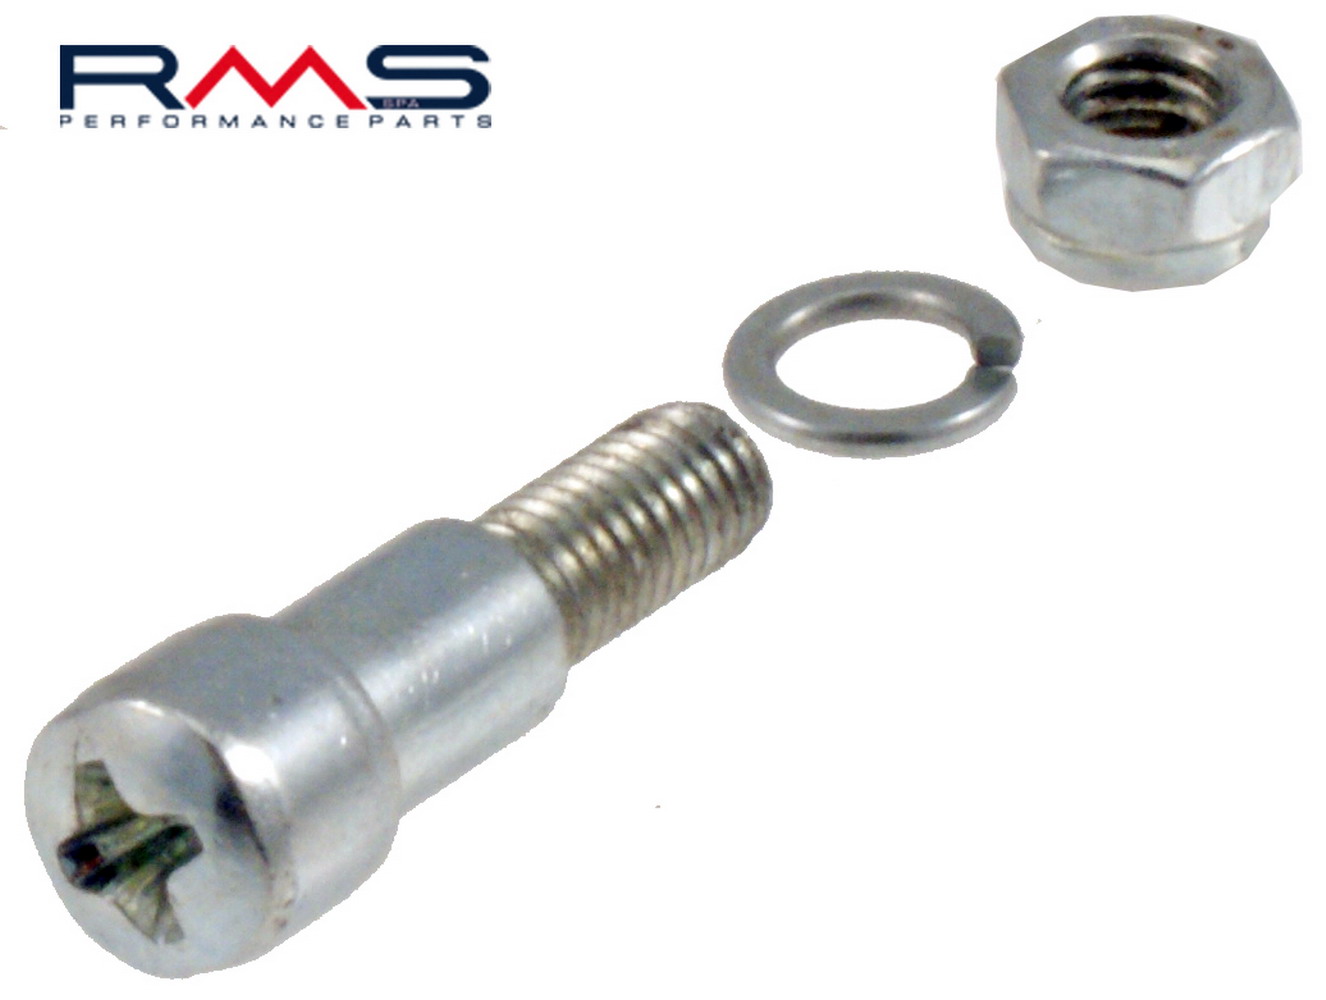 Obrázek produktu Lever securing screw RMS 121856120 (50 kusů)